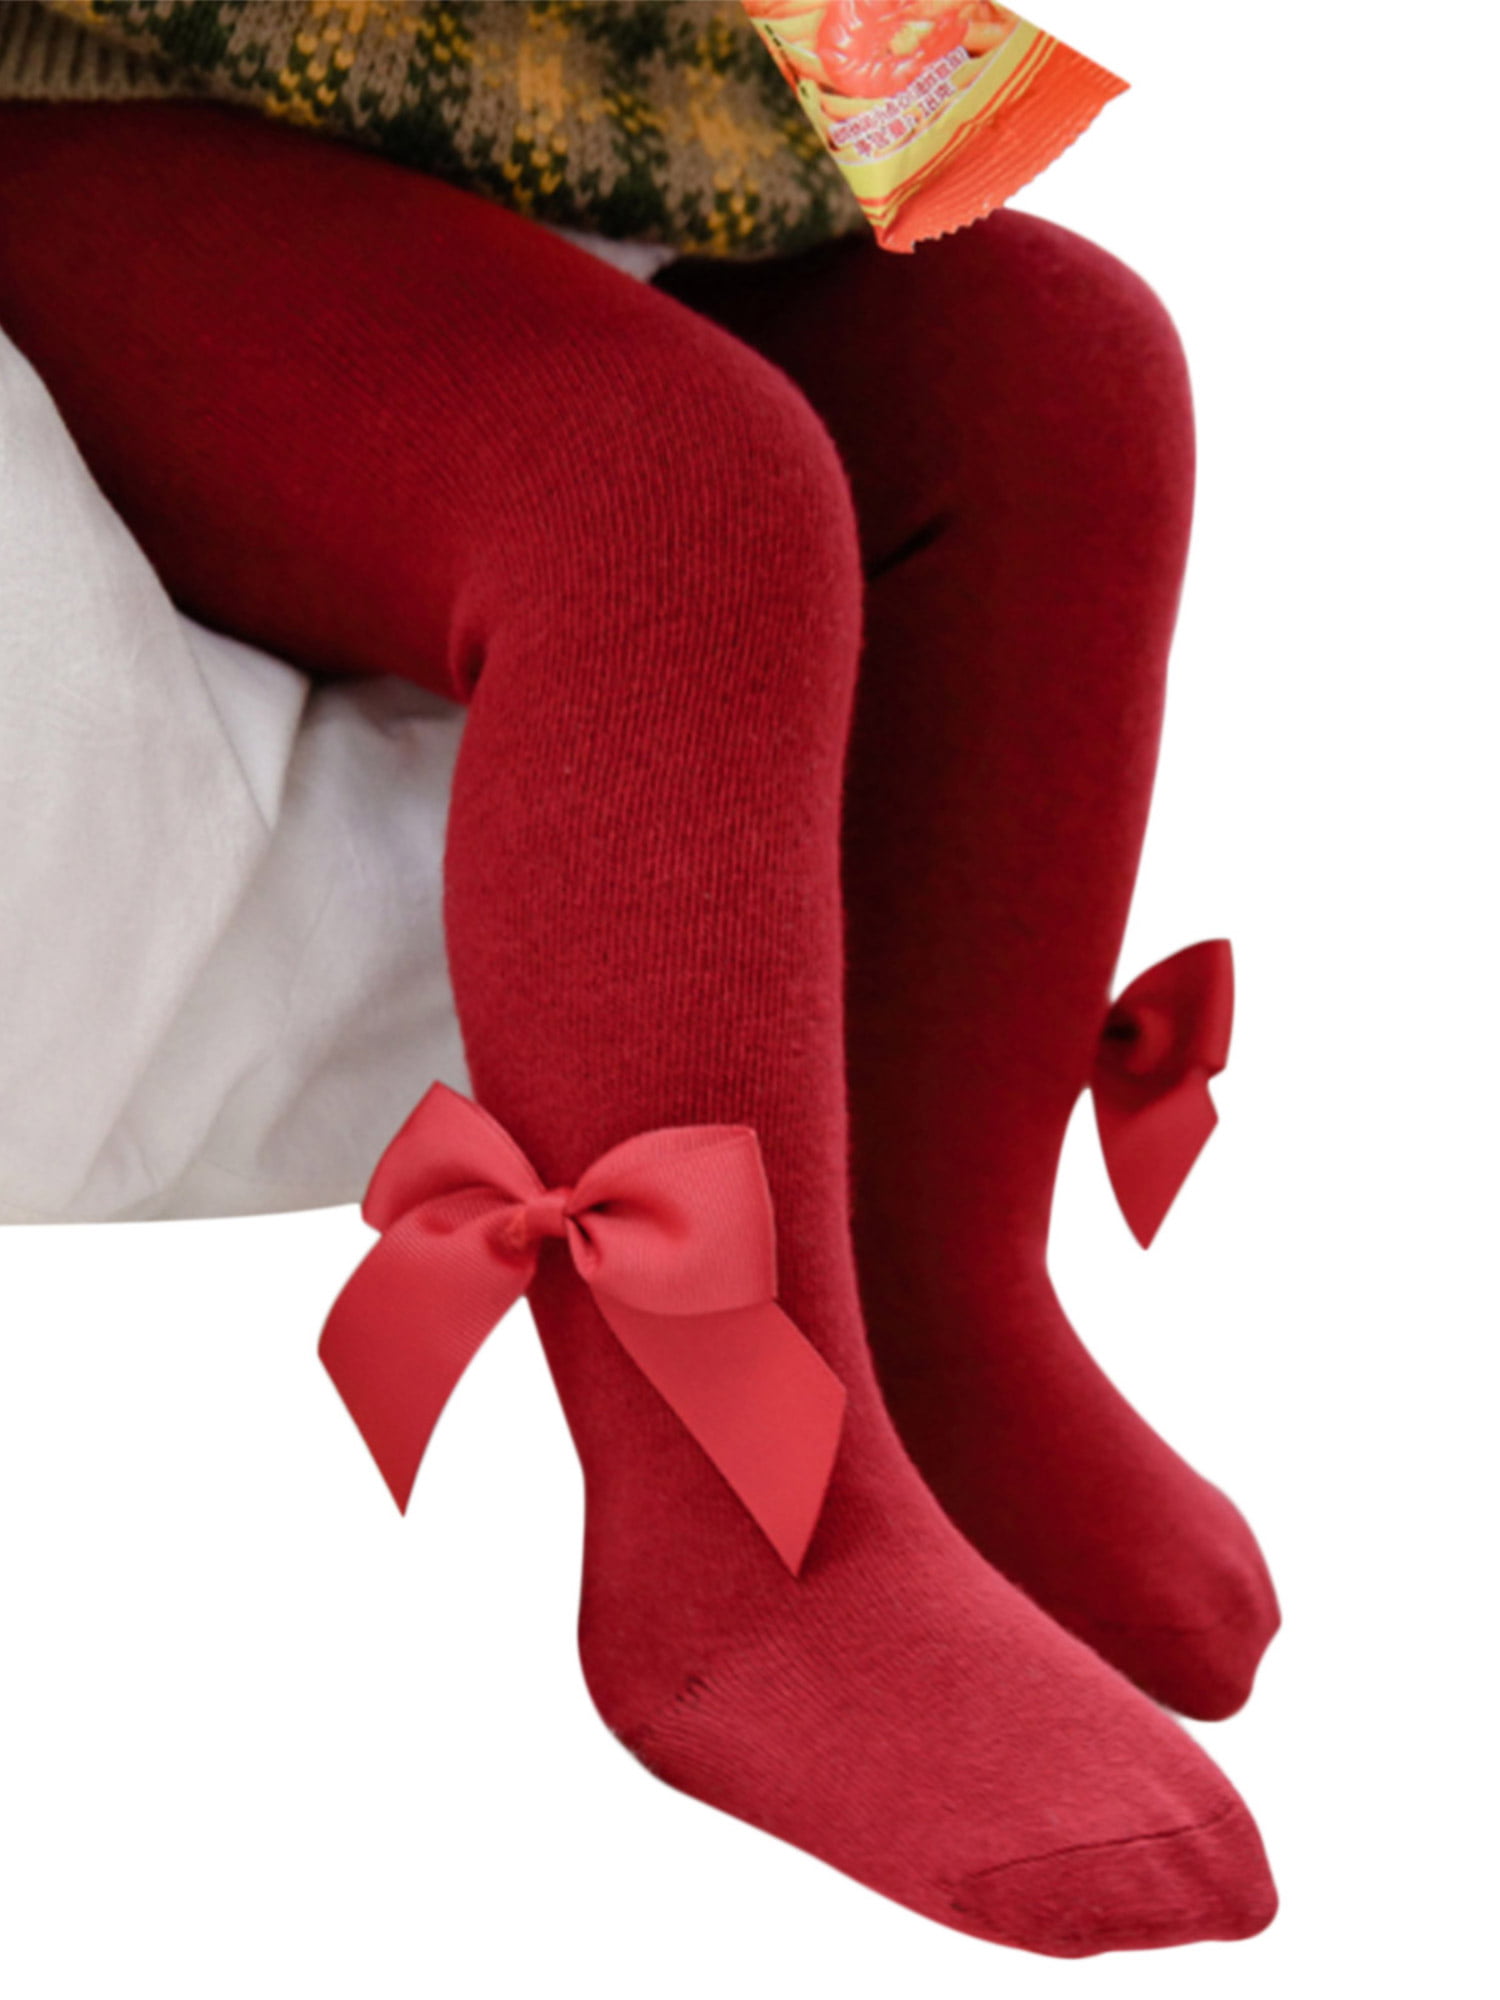 Seamless Knit Cotton Leggings Pants Infant Toddler Girl Stockings Baby Girls Tights 